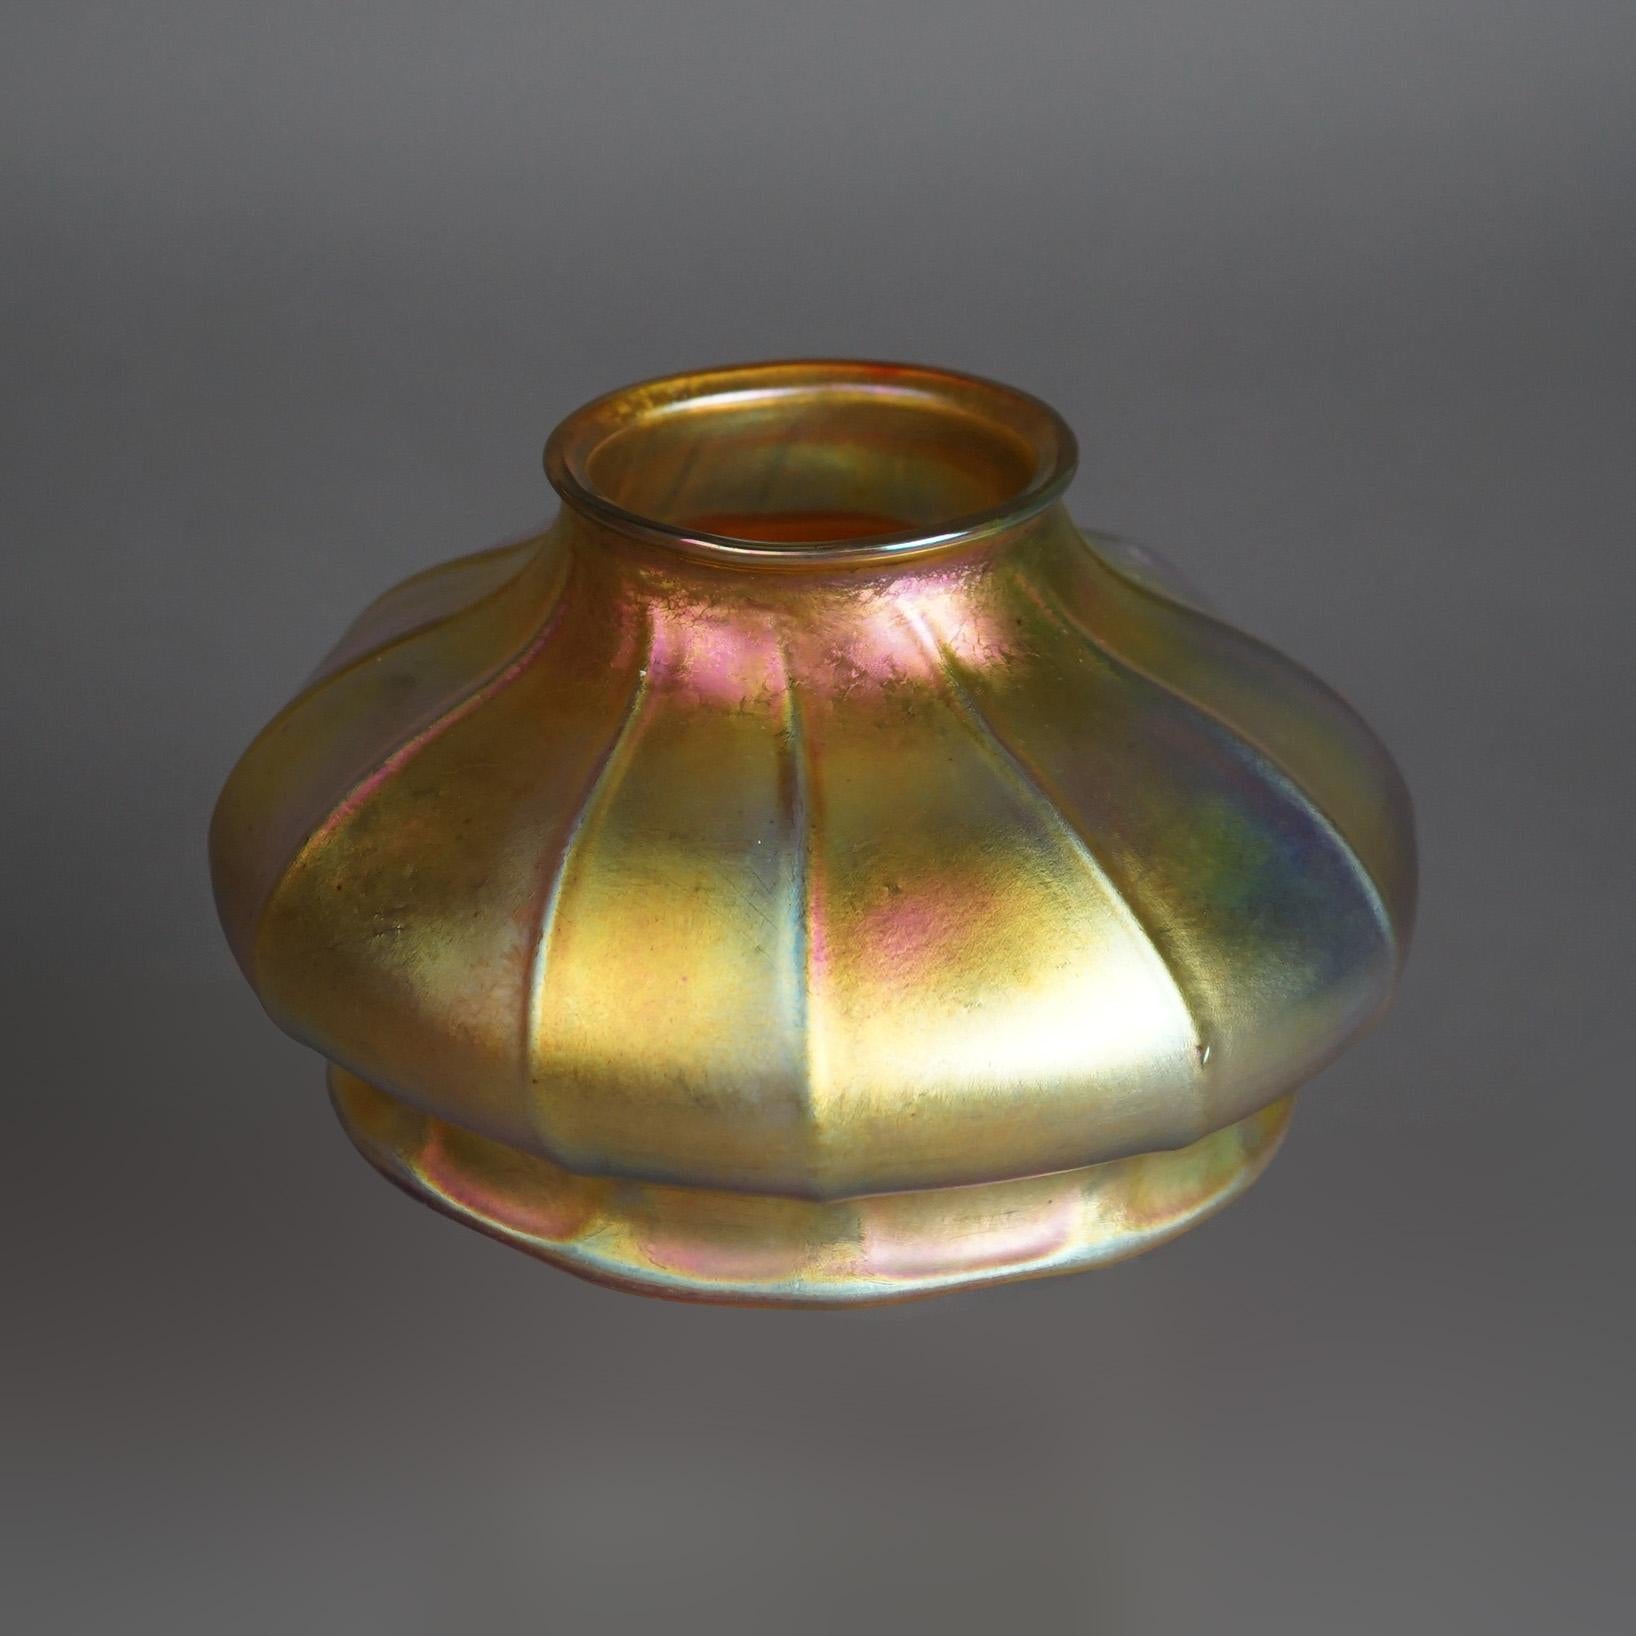 Antique Arts & Crafts Steuben Art Glass Oversized Gold Aurene Lamp Shade Circa 1920

Measures - 4.5